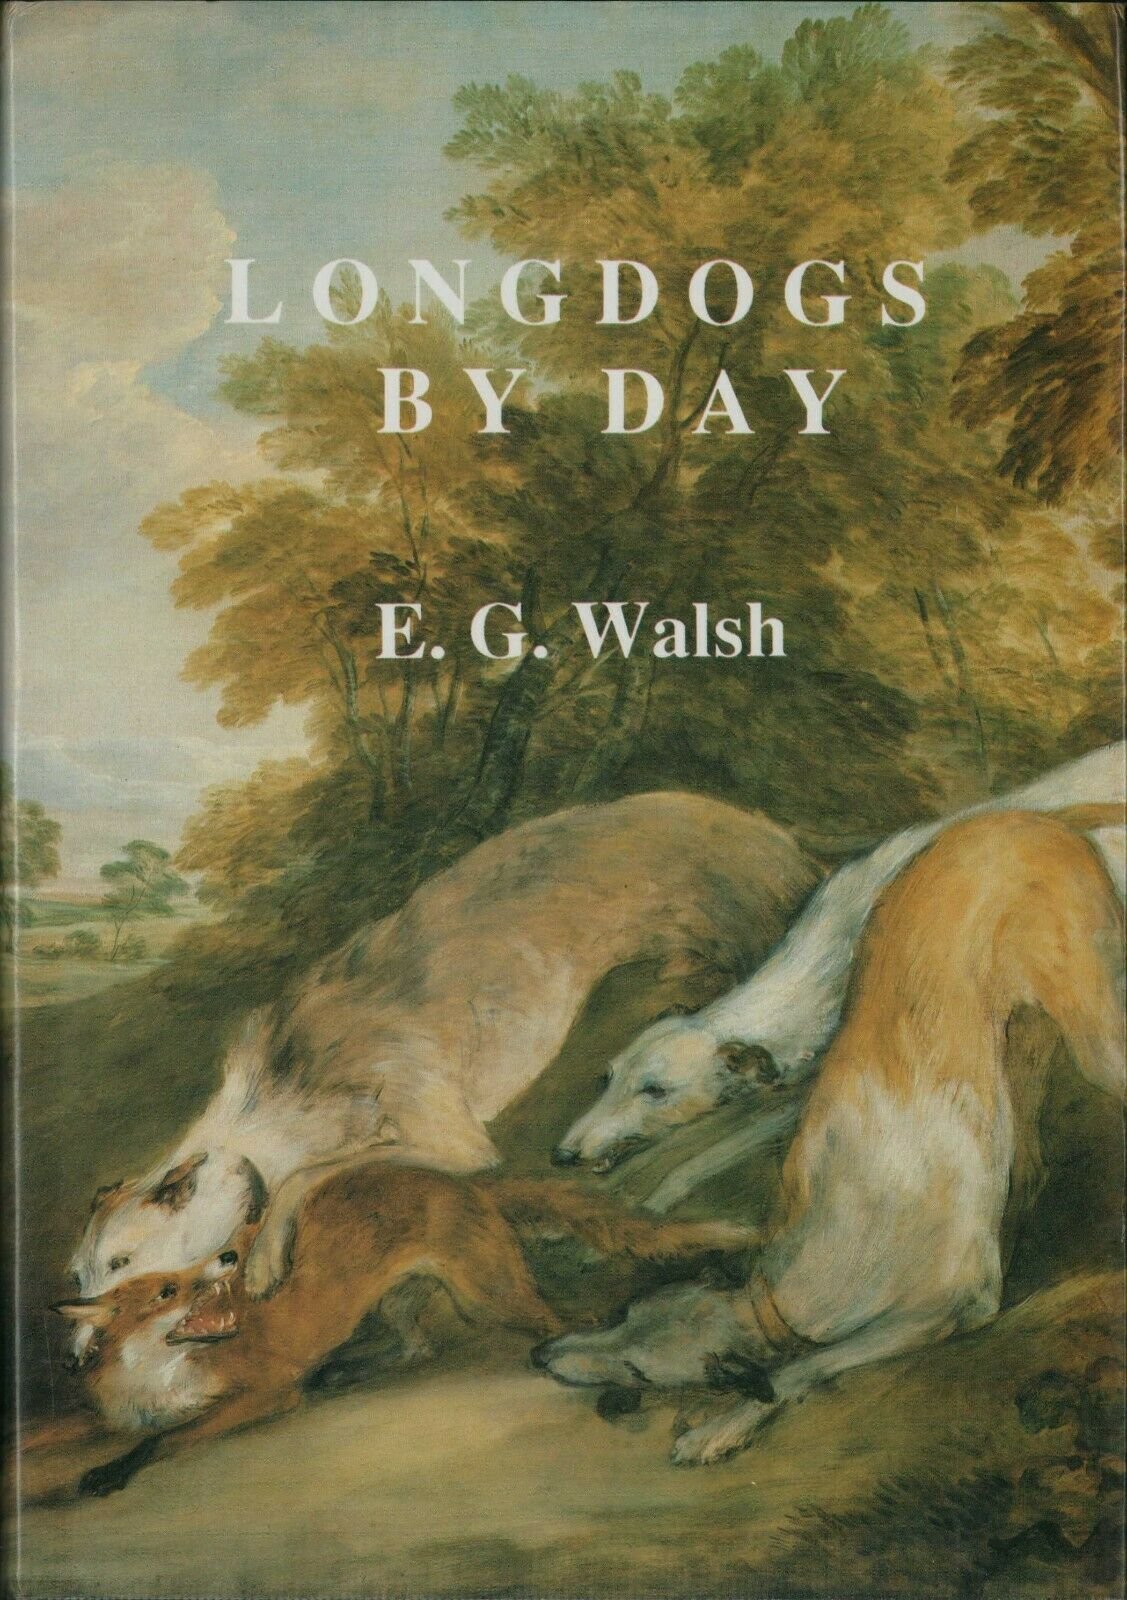 Longdogs by day book E.G.Walsh